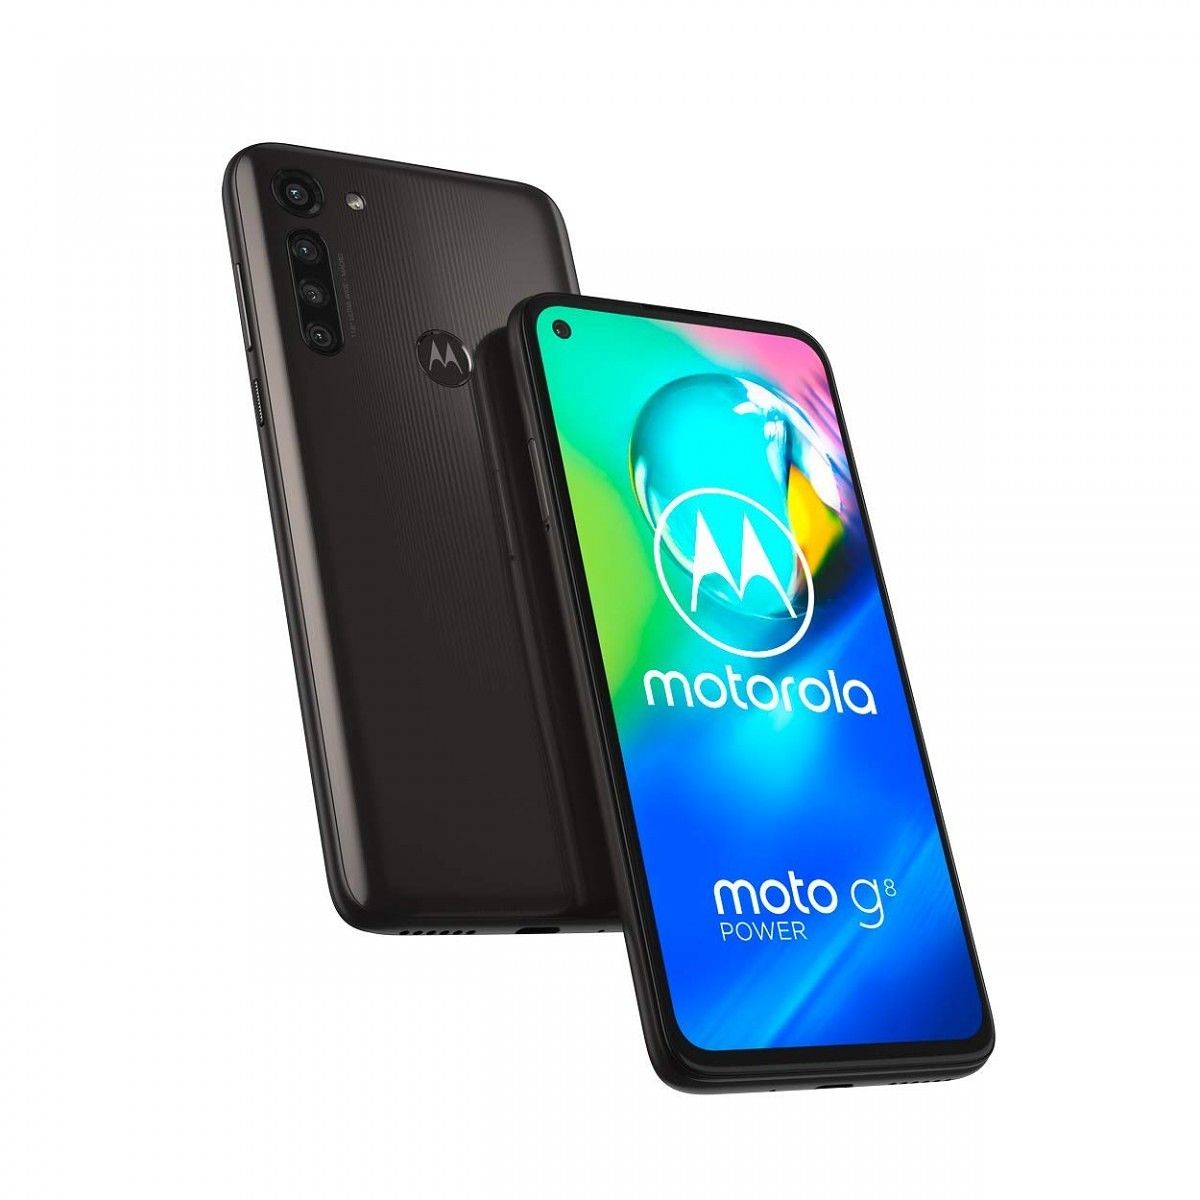 Moto G Power large battery phone